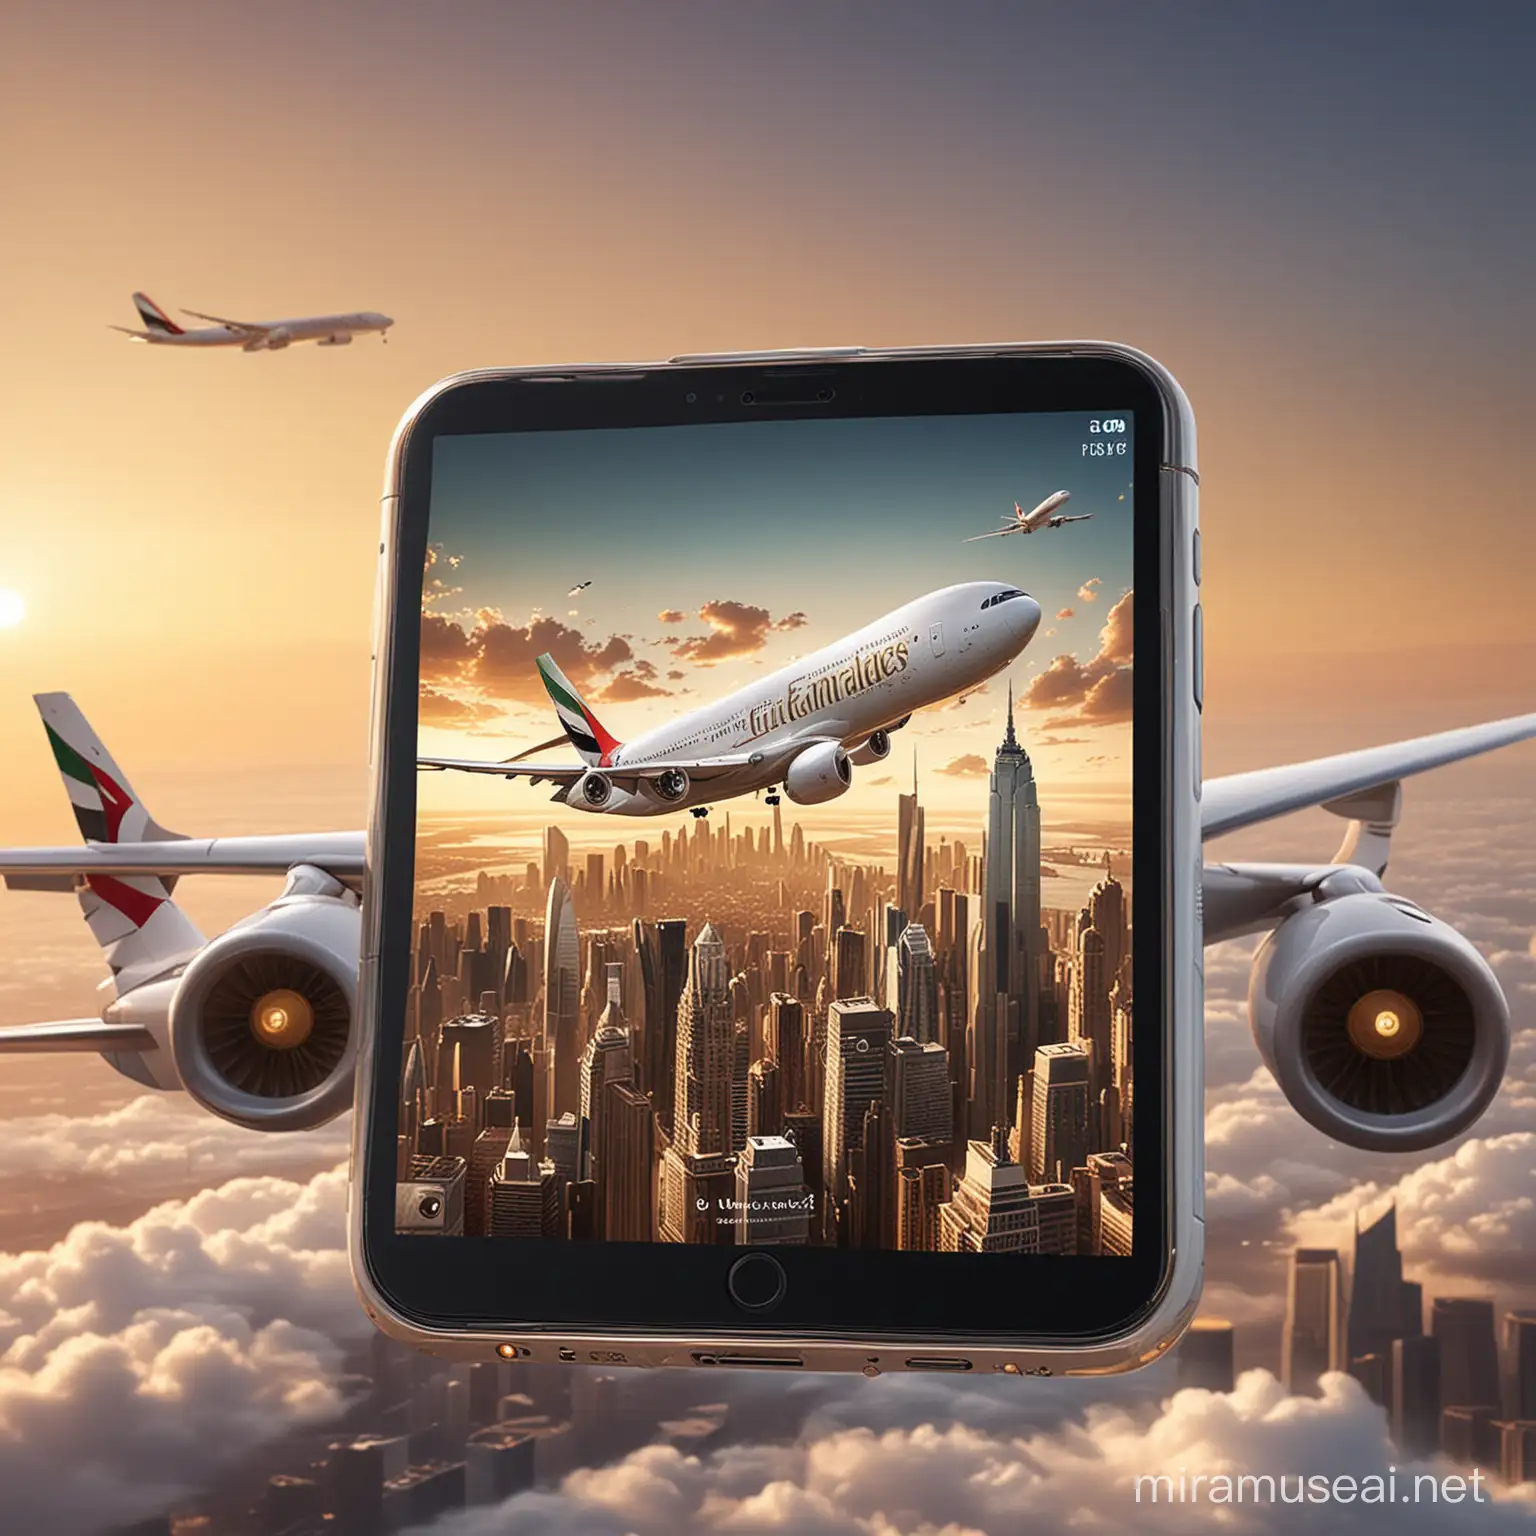 Futuristic Emirates Airplane Smartphone Merge in Hyperrealistic Style